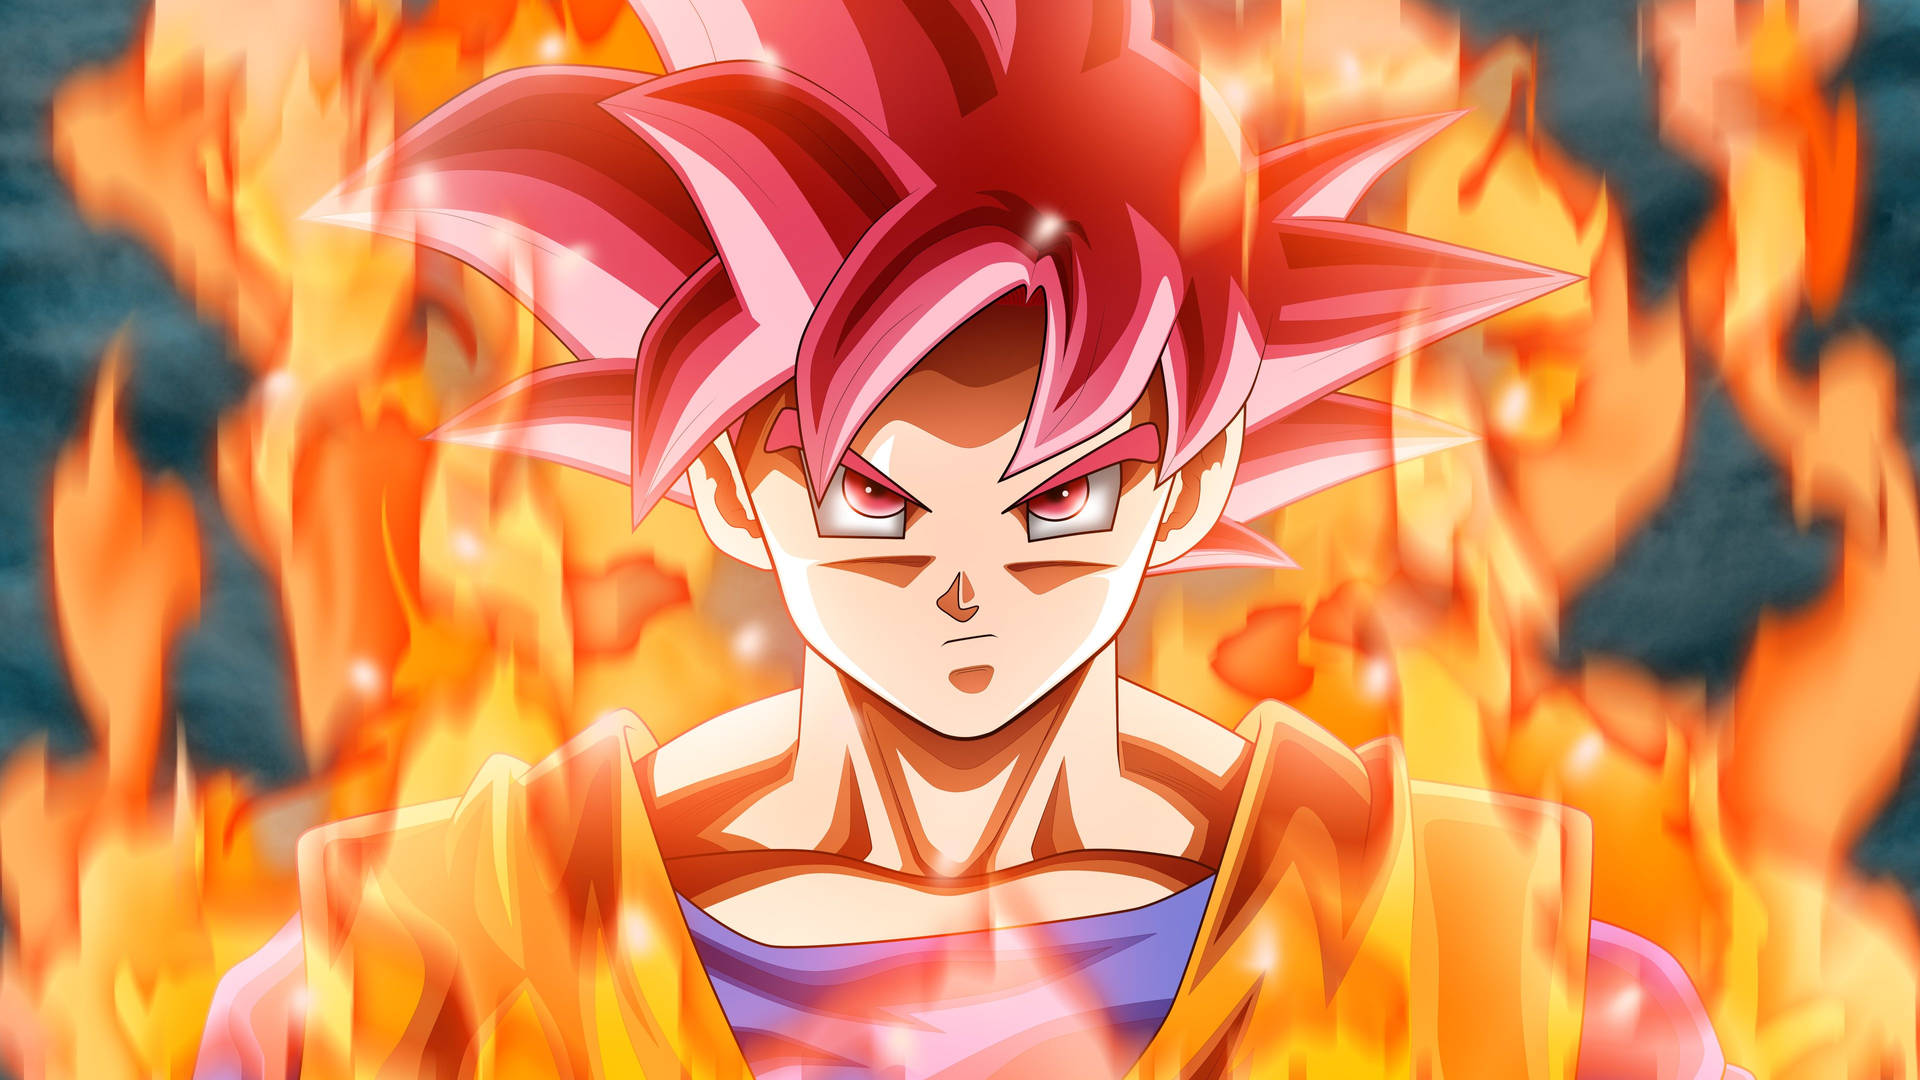 Goku Dragon Ball Super With Fire Wallpaper